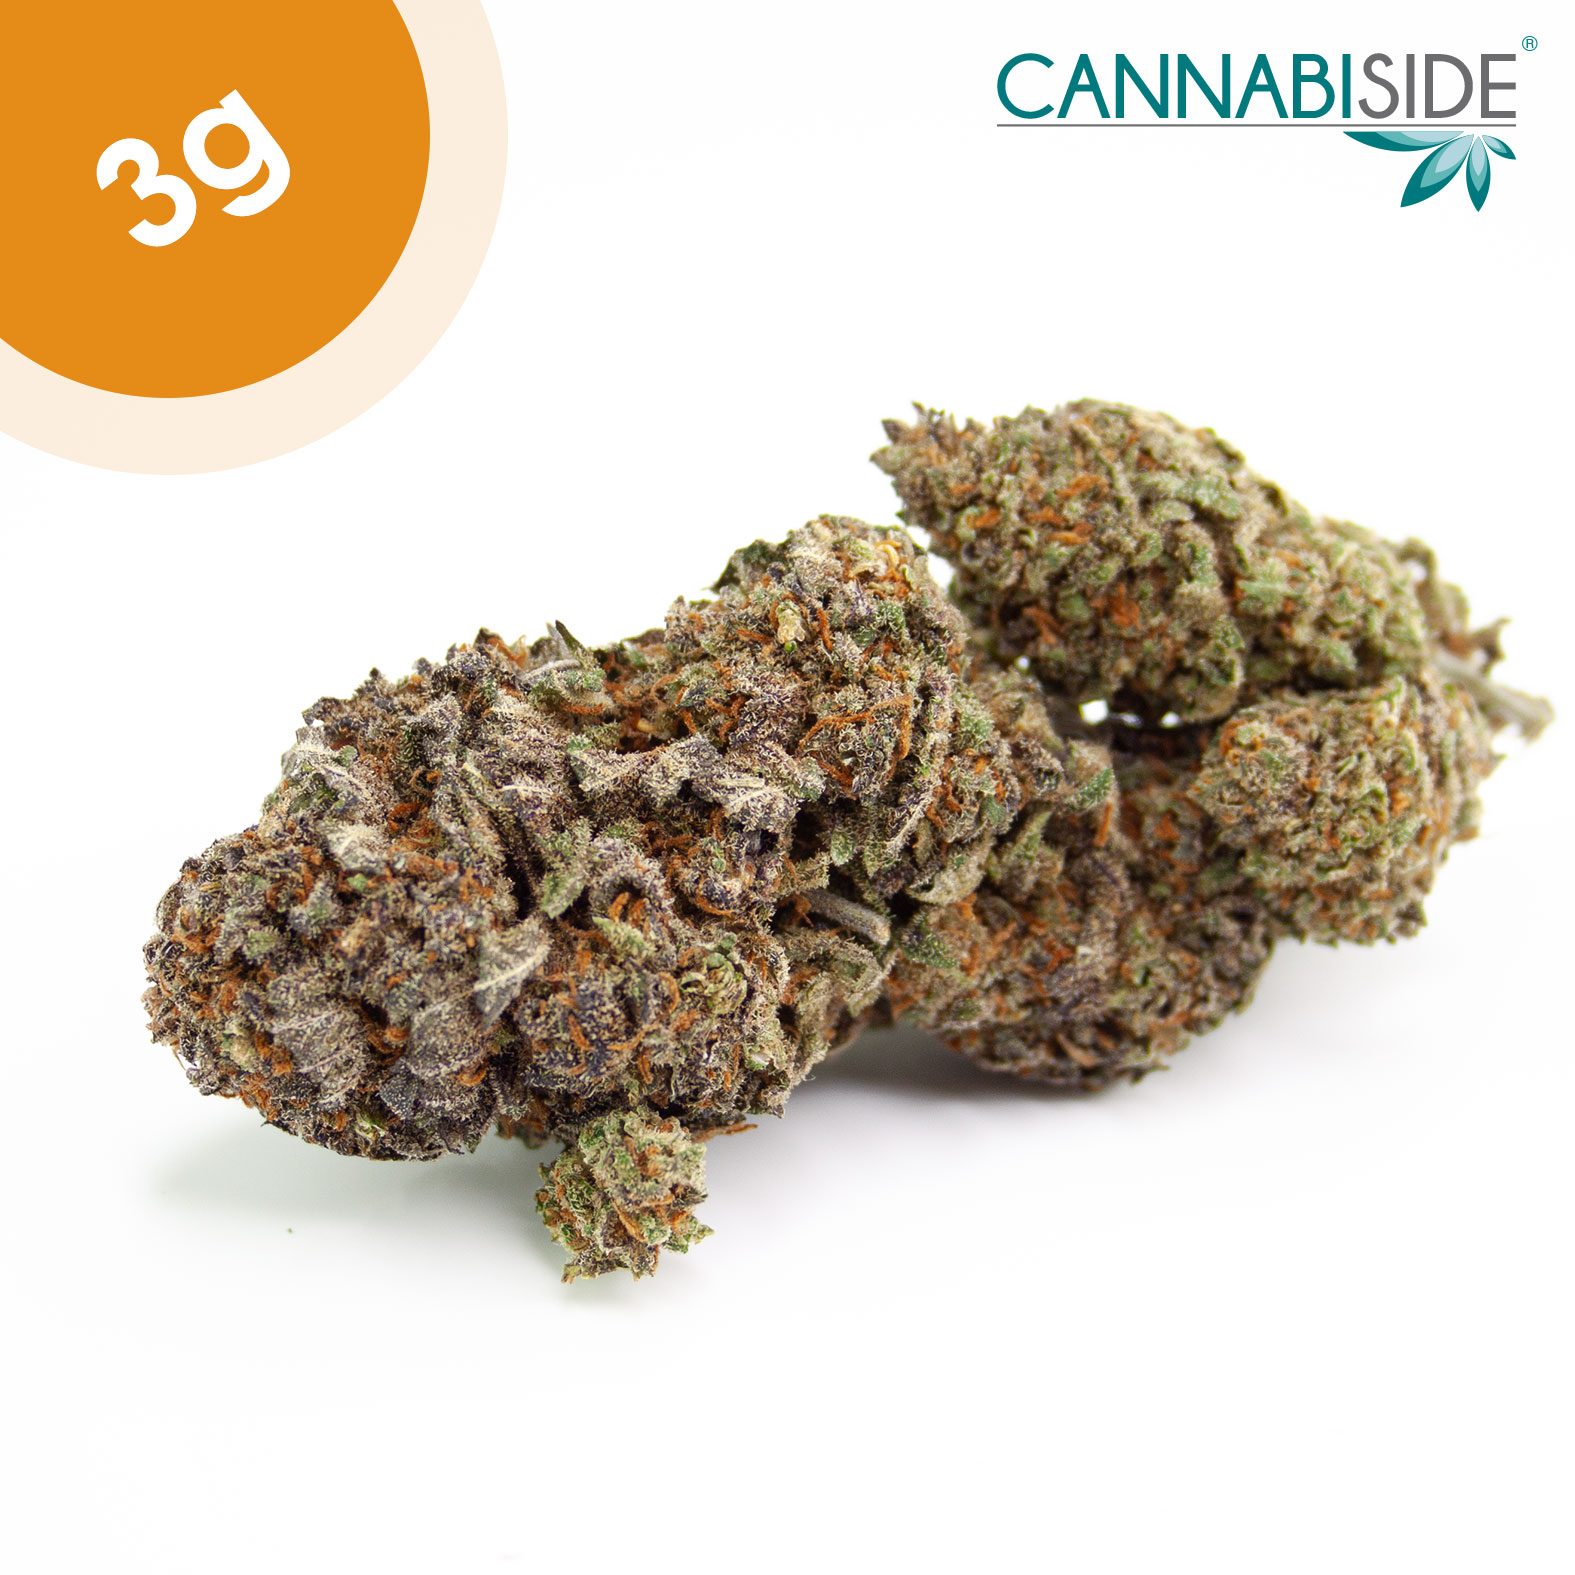 Purple Fruit Seedless Legal CBD Cannabis Top Quality 3g | CannabiSide